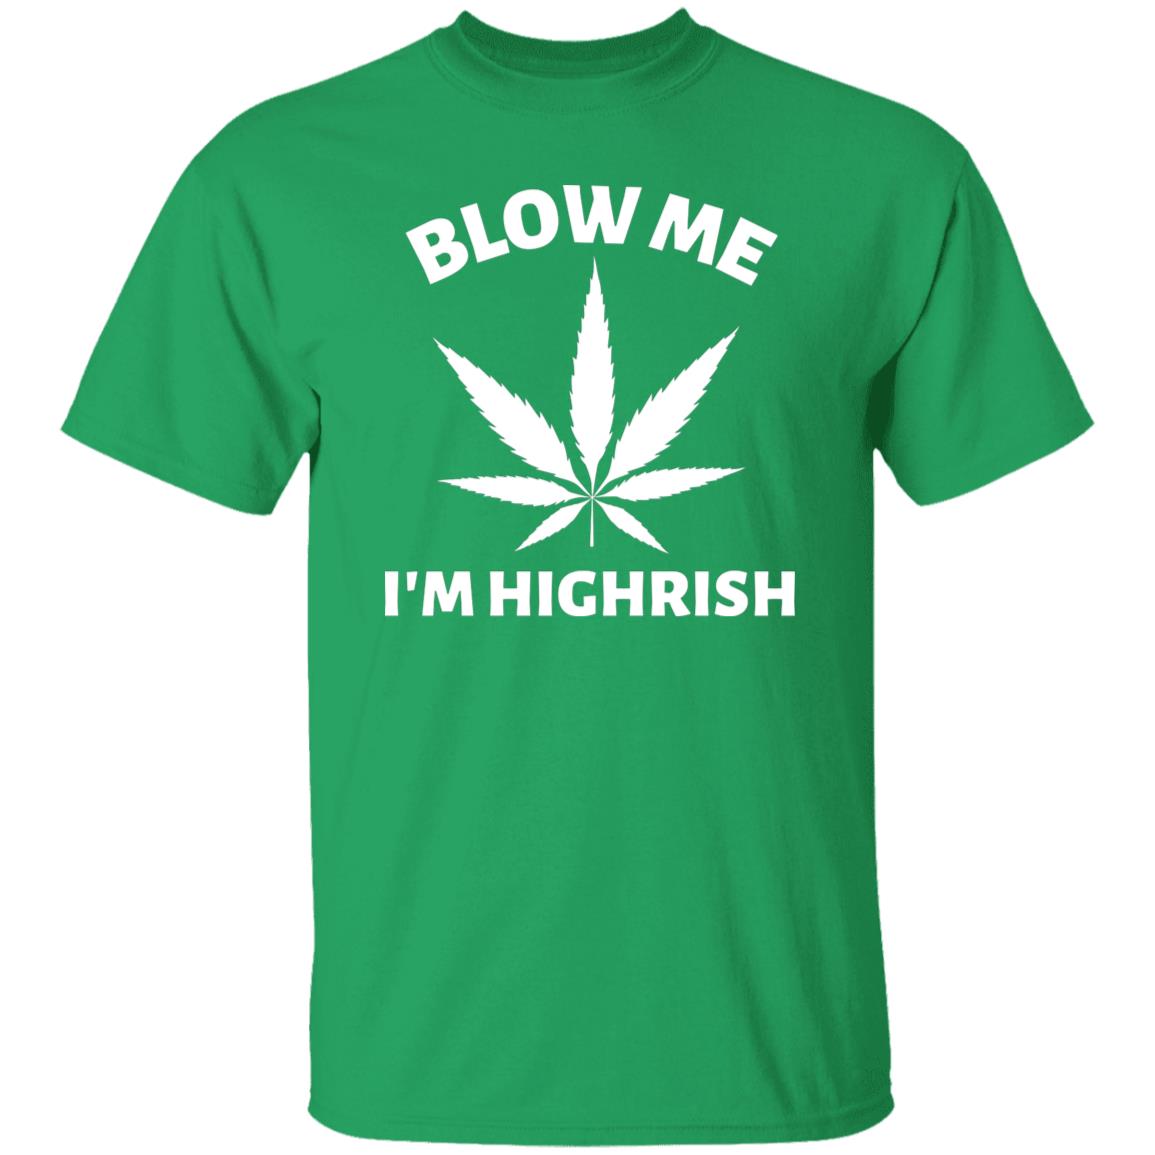 Blow Me I'm Highrish, St. Patricks Day Tshirt For Stoners